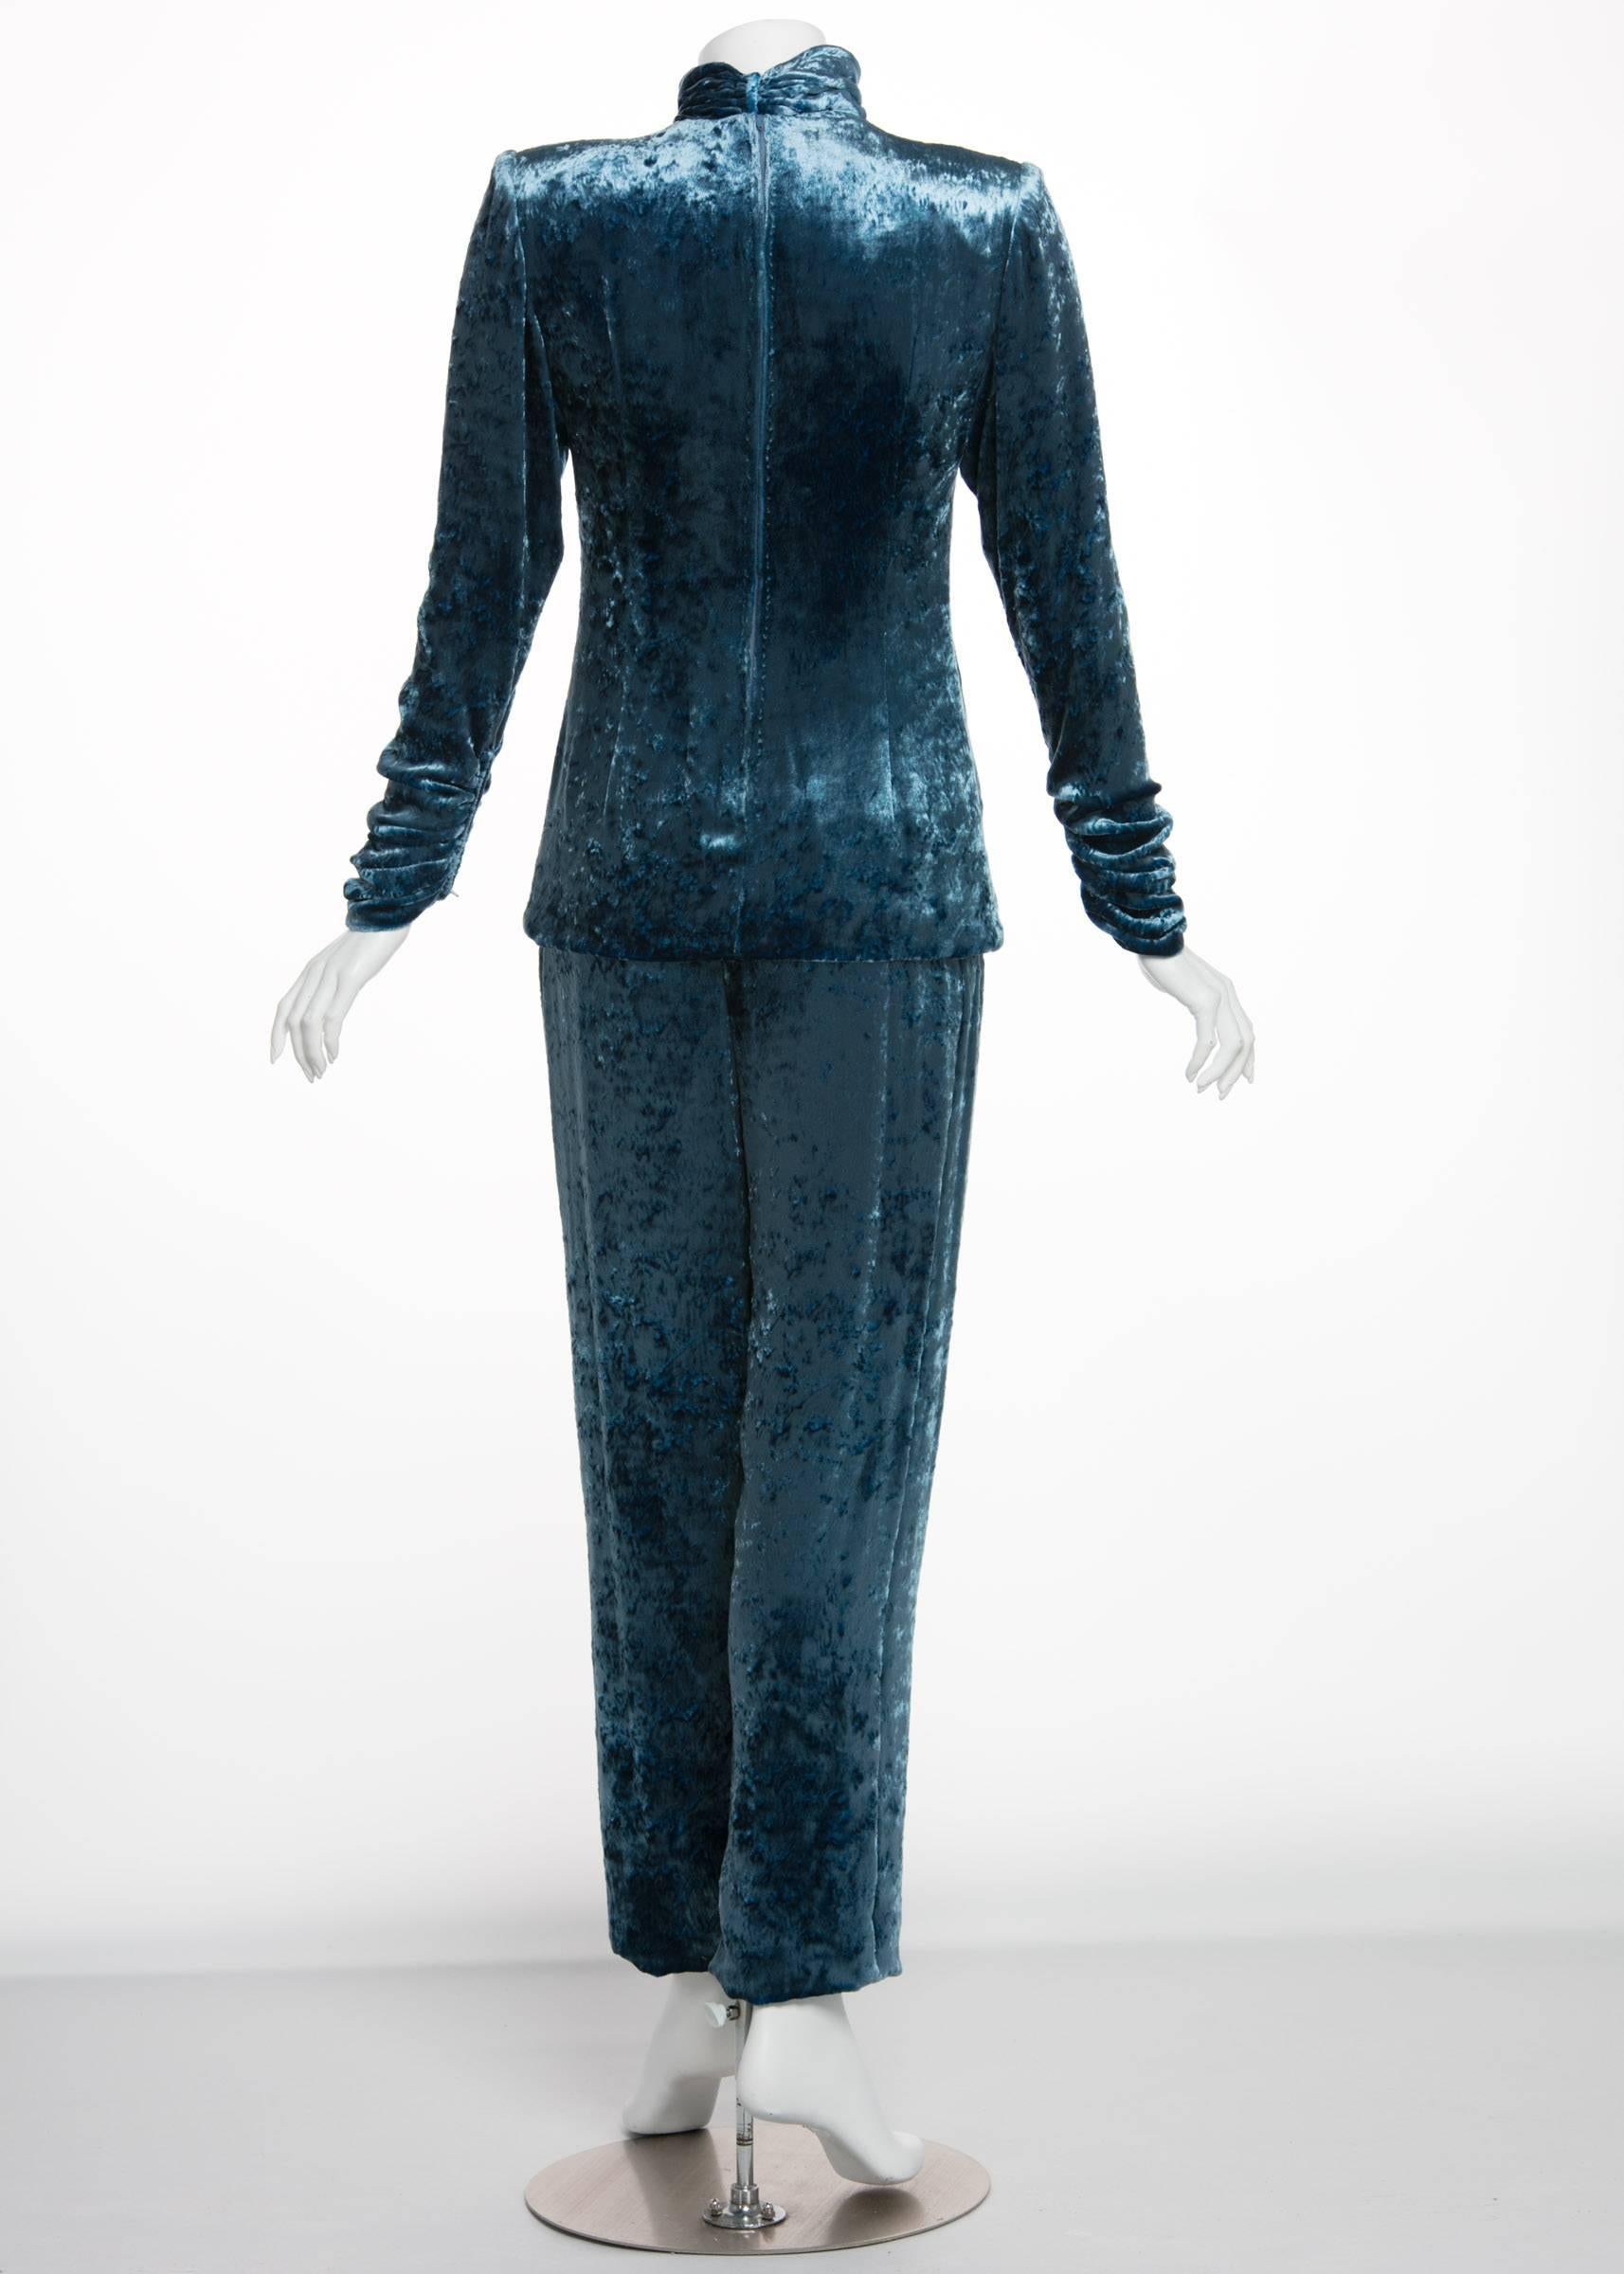 Galanos Couture Blue Velvet Evening Tunic Top Pants Suit, 1980s  For Sale 1